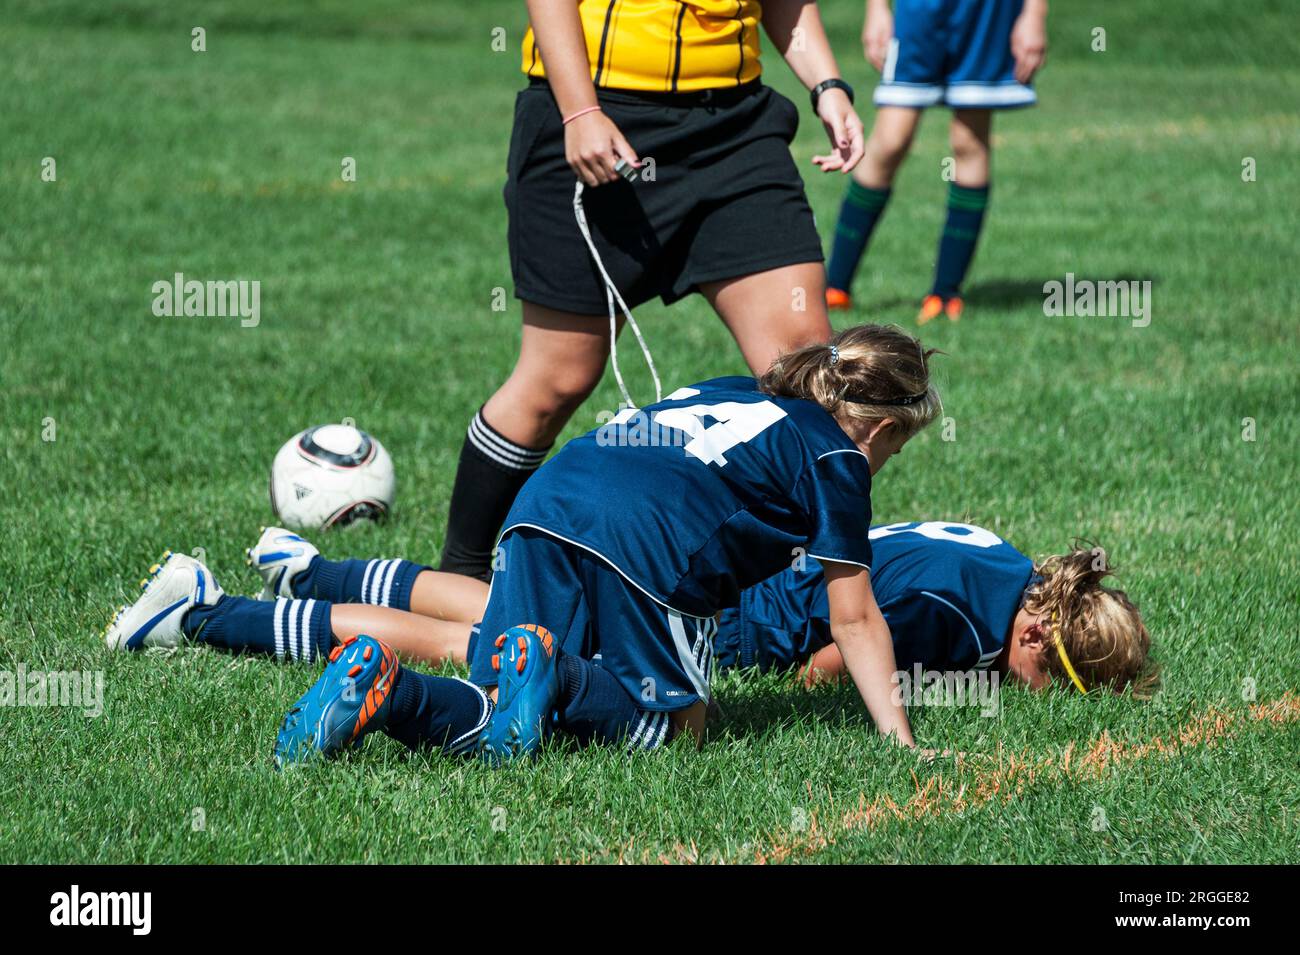 Girls youth soccer injury. Stock Photo